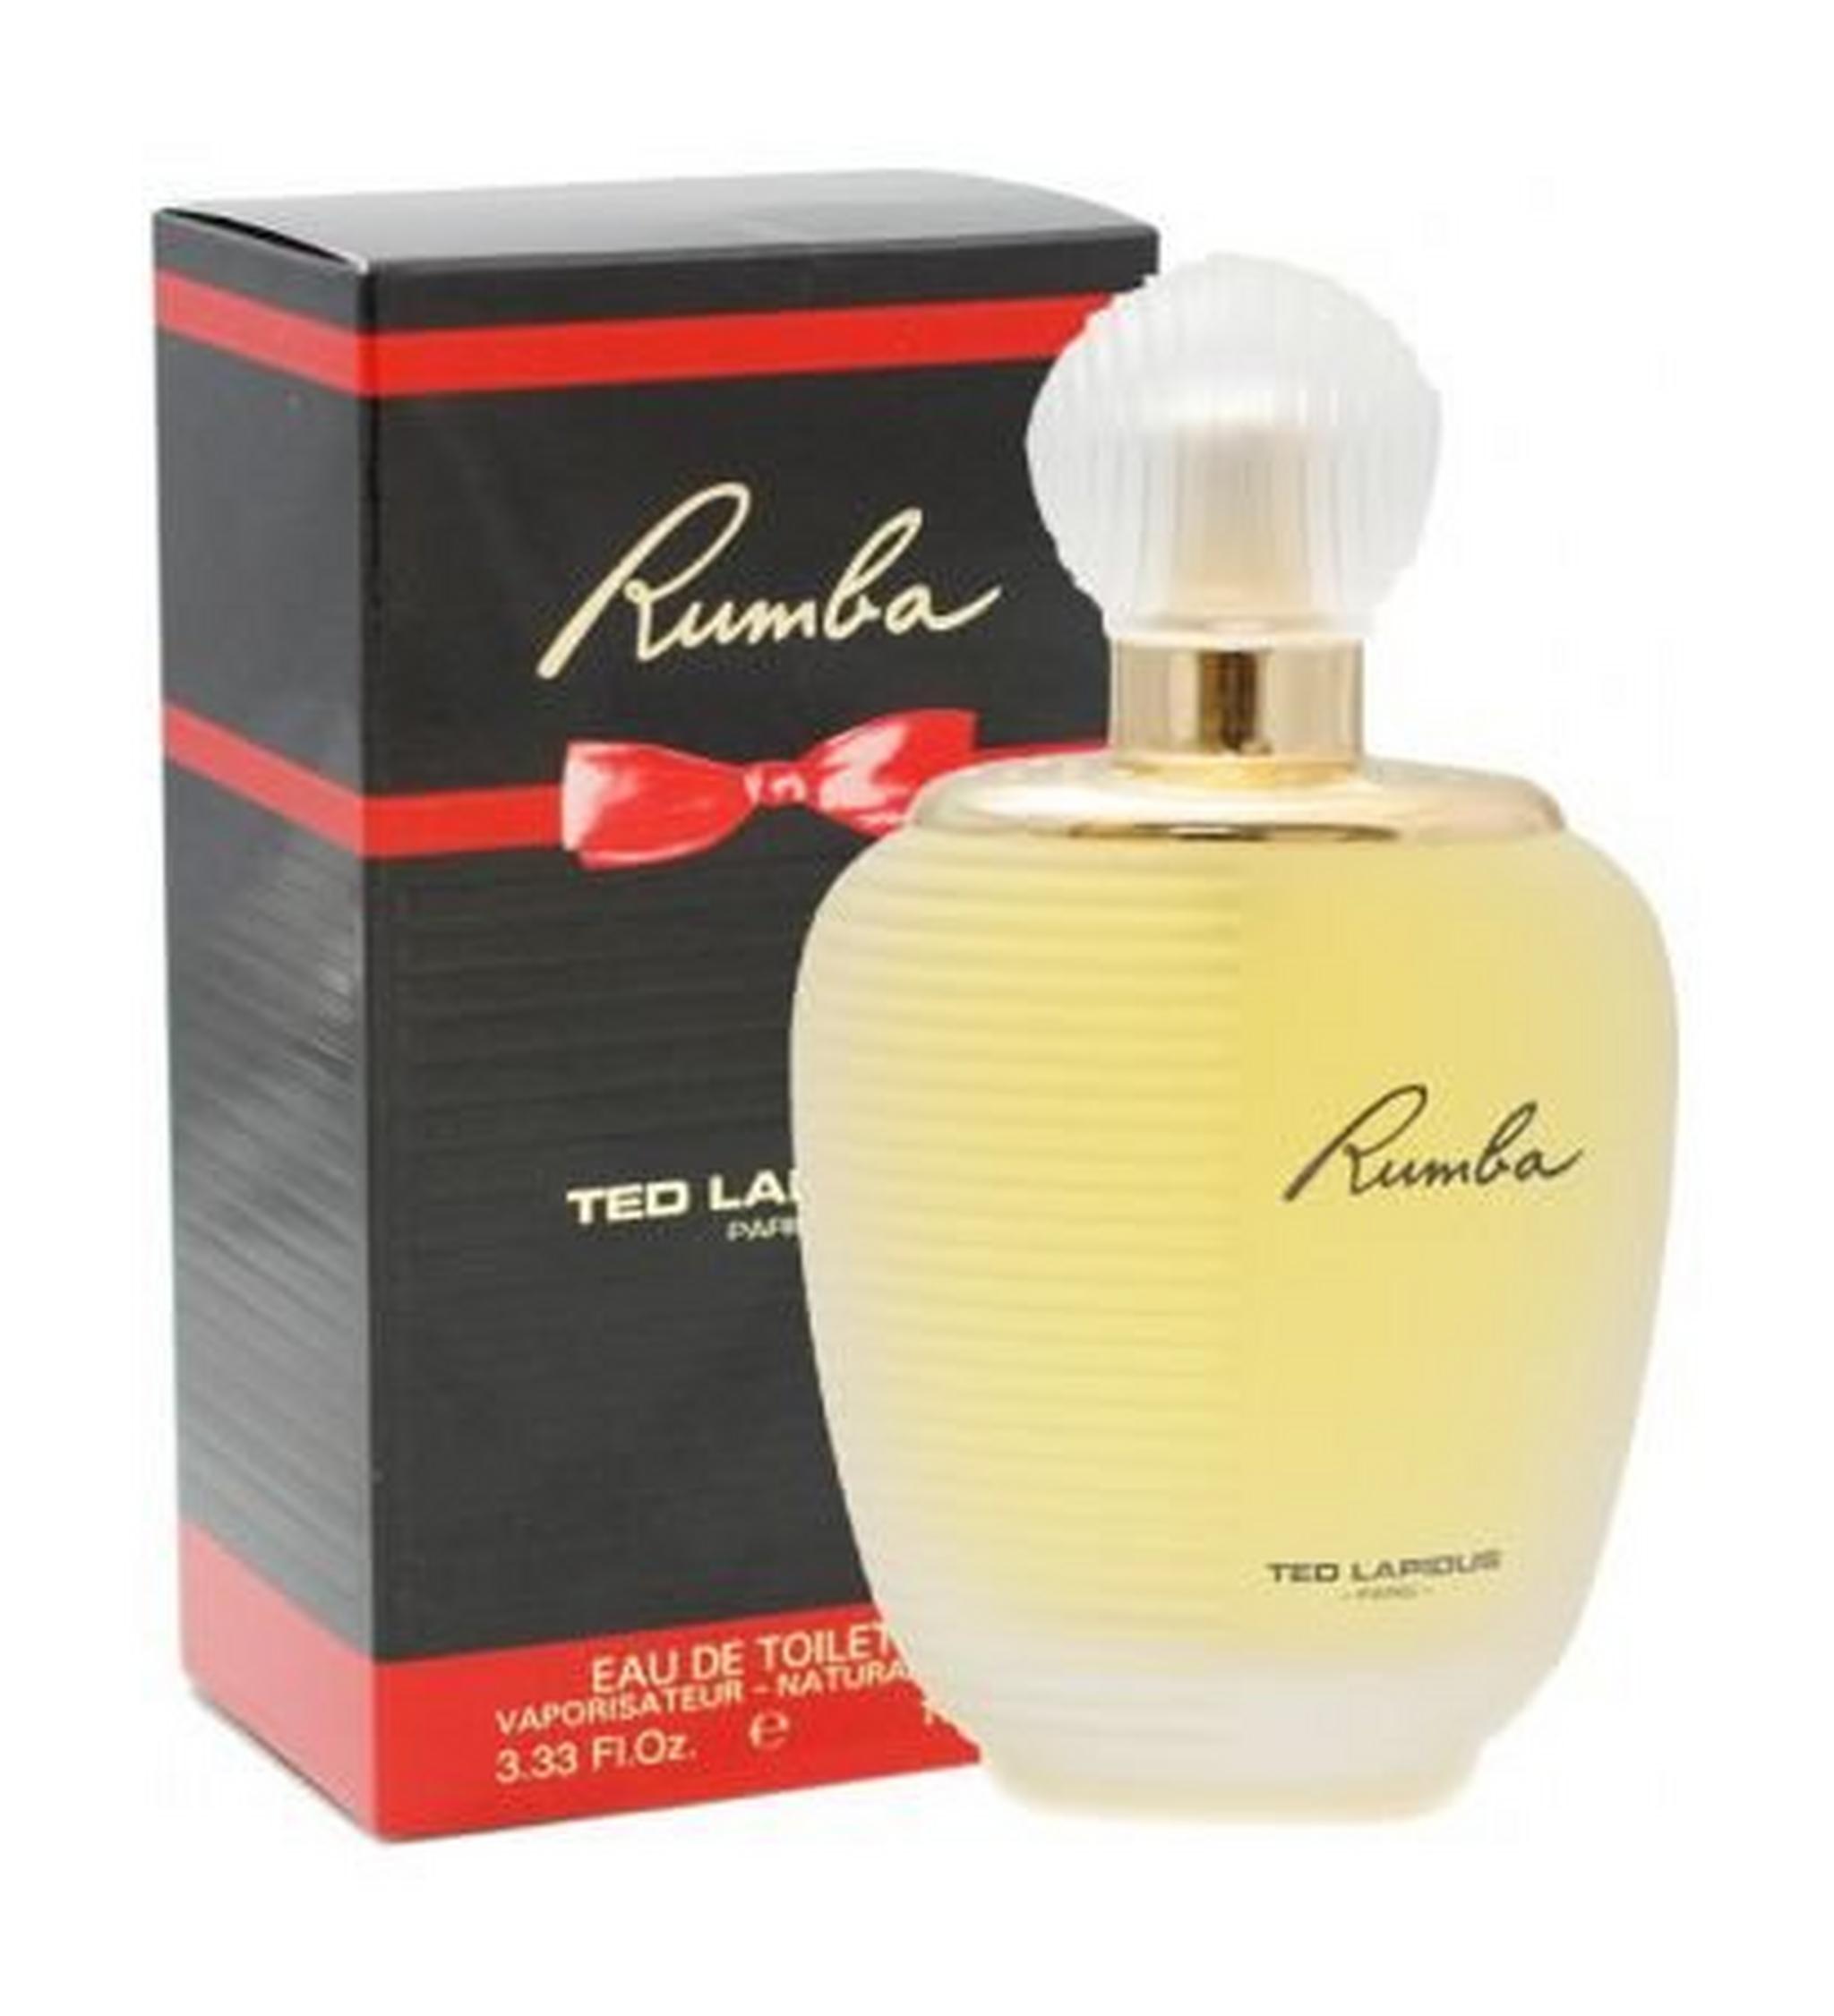 Rumba by Ted Lapidus 100ml Womens Perfume Eau de Toilette